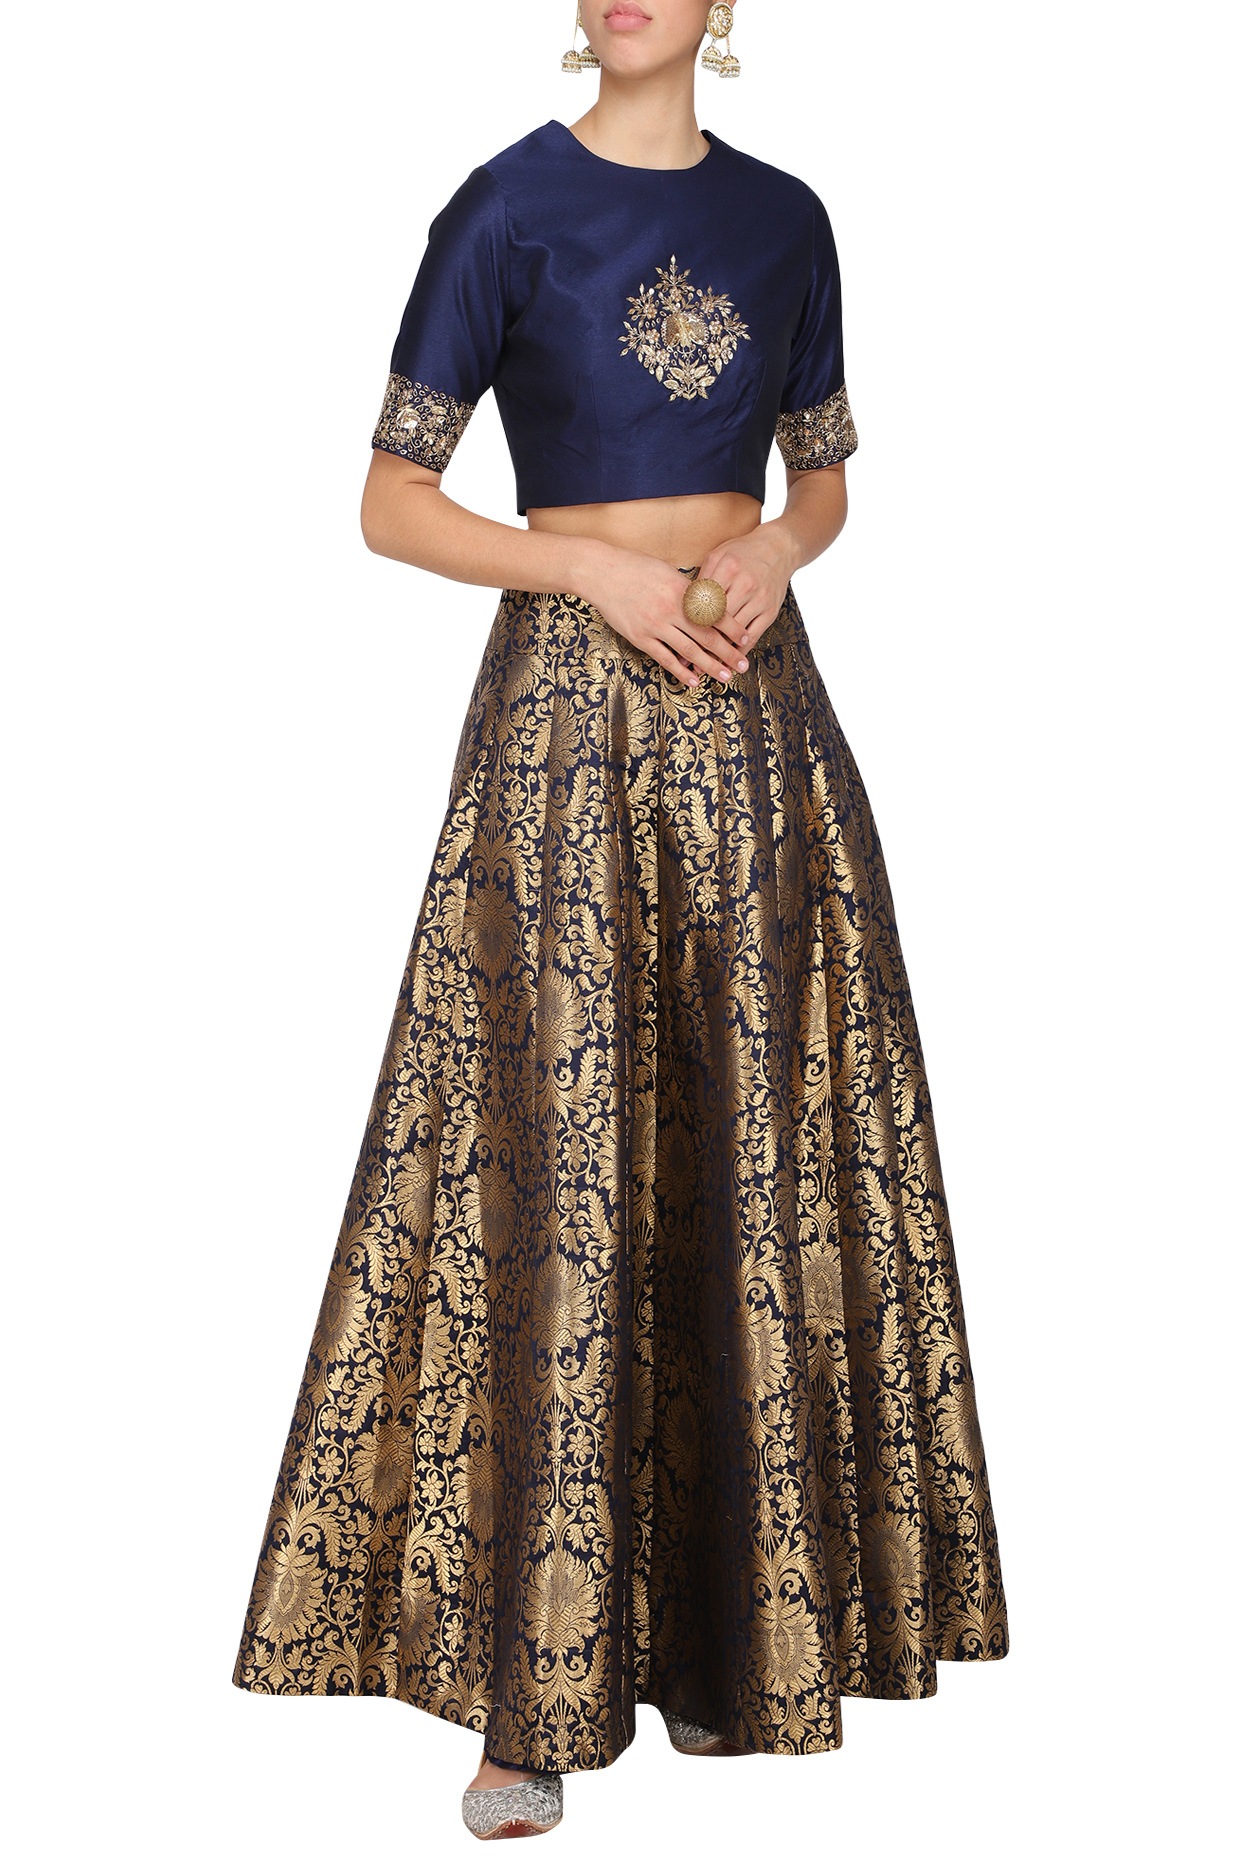 Sky Beauty Sequence Work Indian Party Net Lehenga Lengha Choli Pakistani  Skirt | eBay